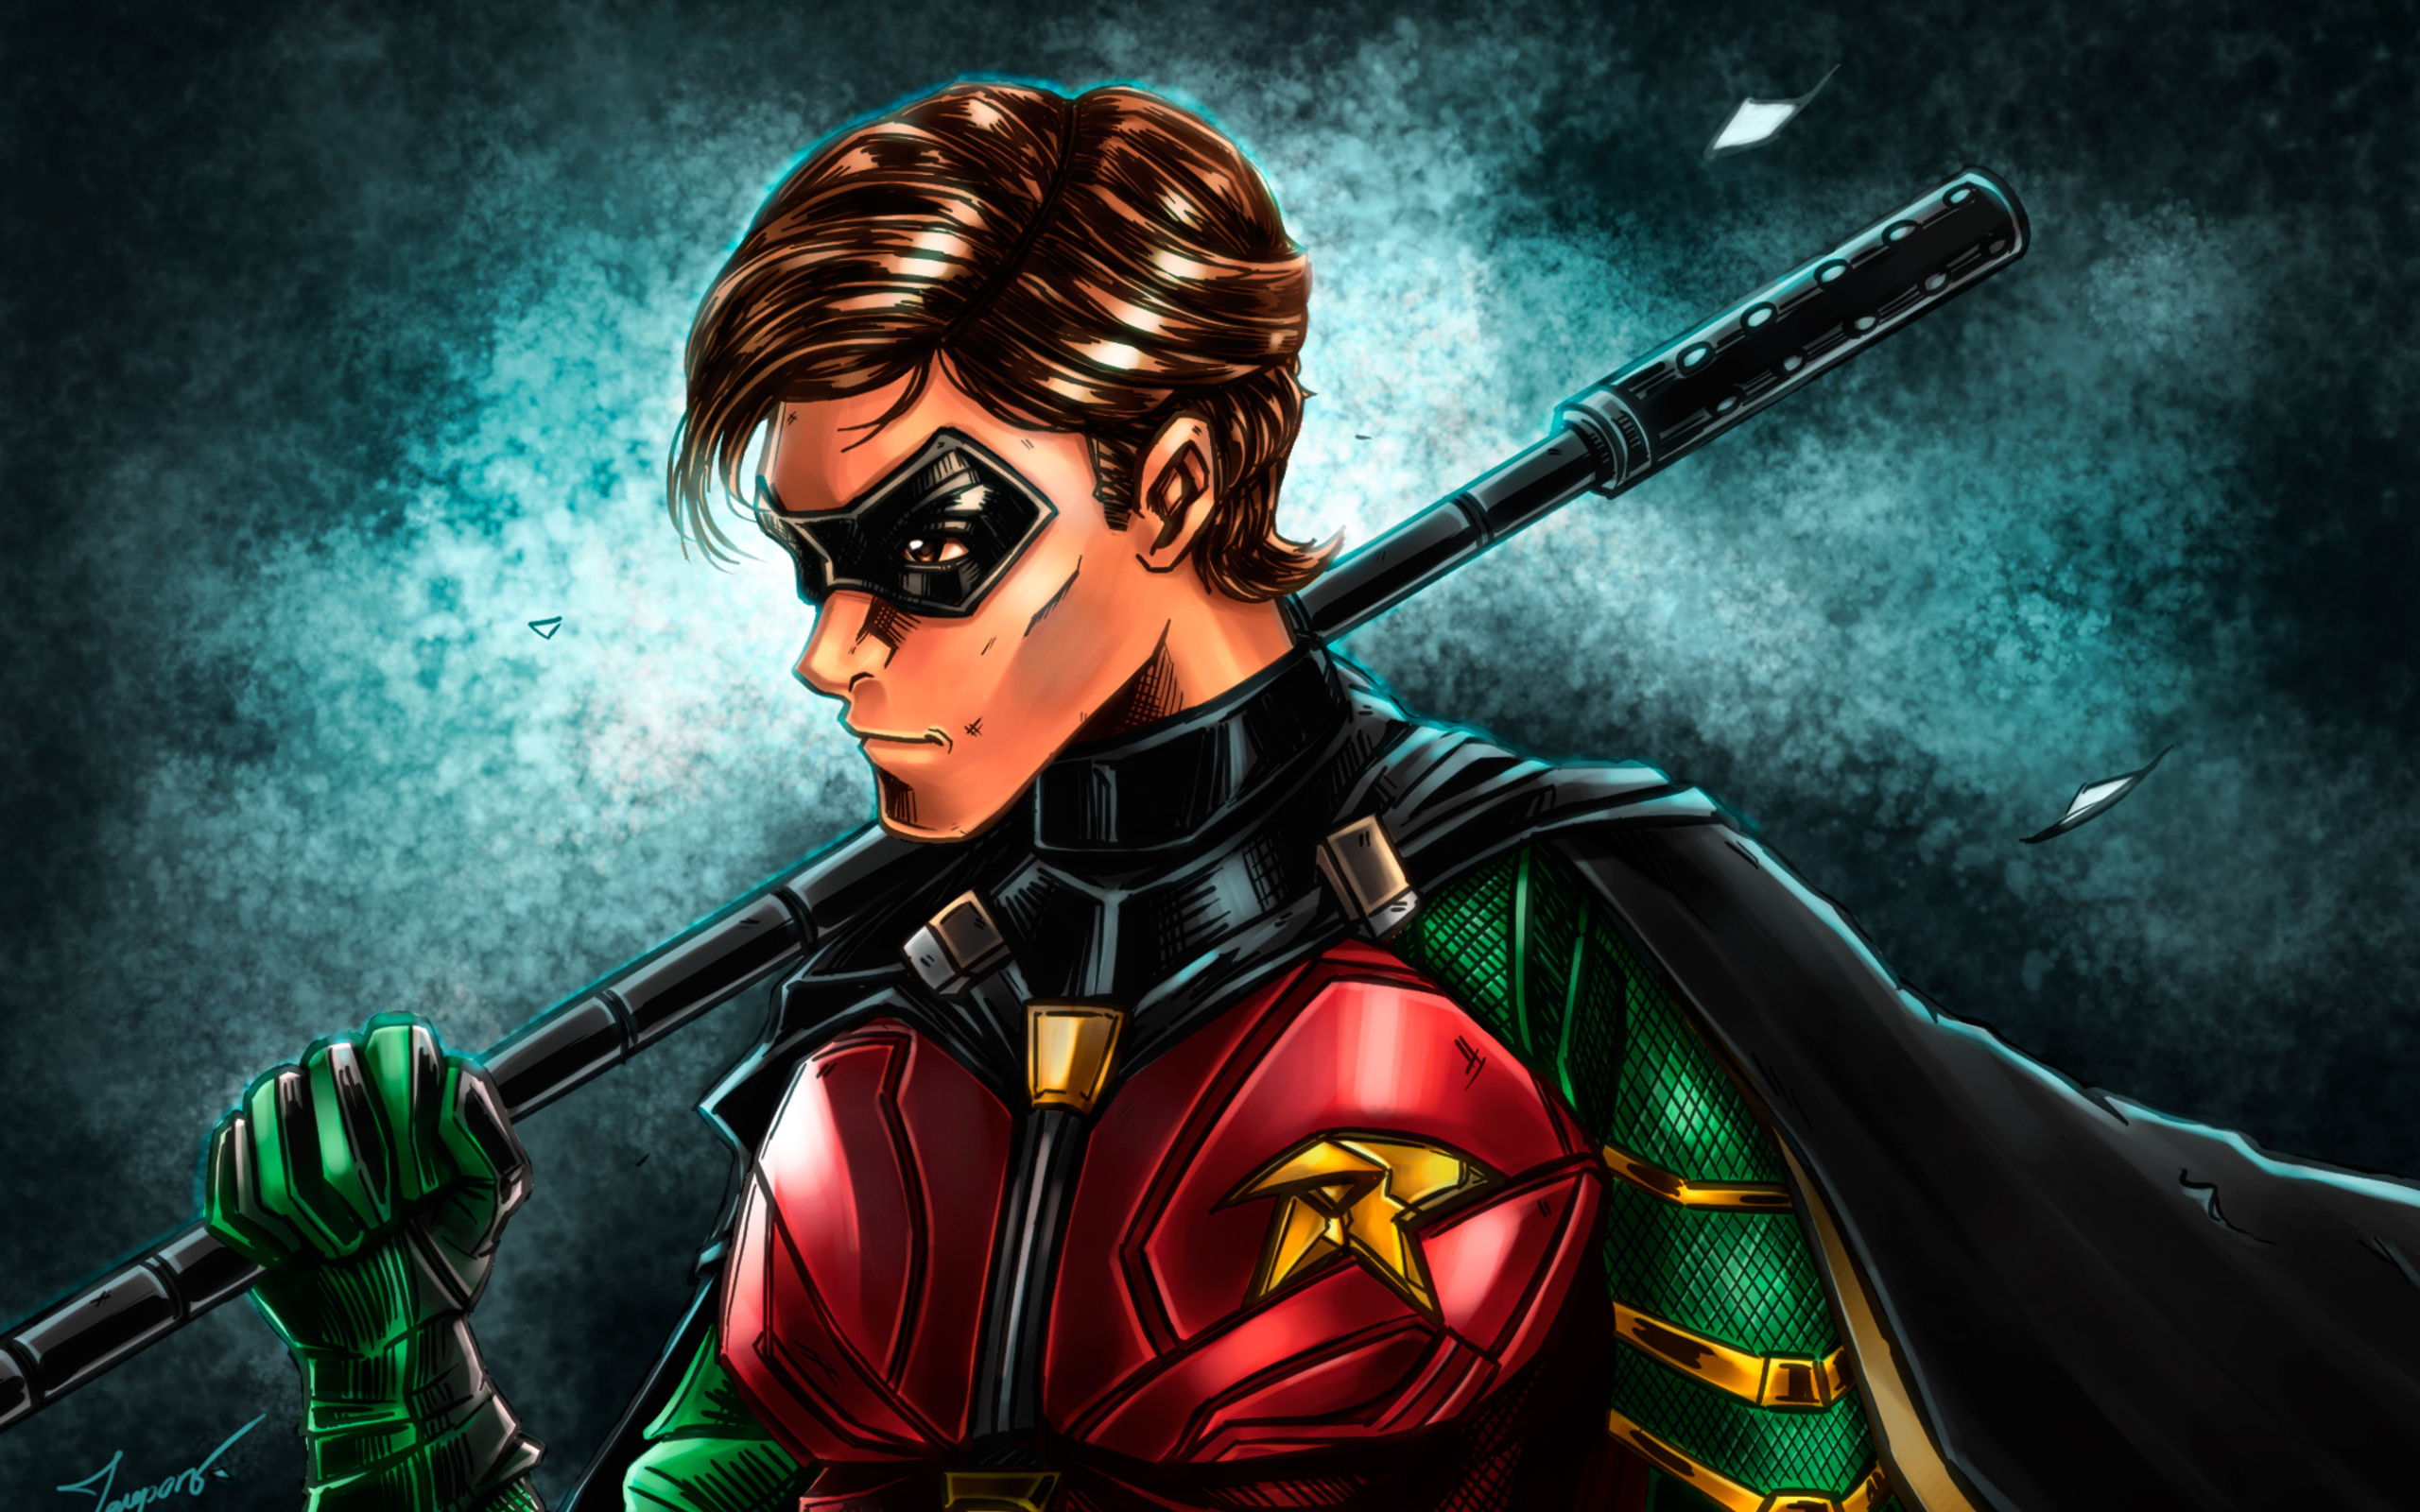 Robin Titans Artwork In 2560x1600 Resolution. robin-titans-artwork-u4.jpg. 